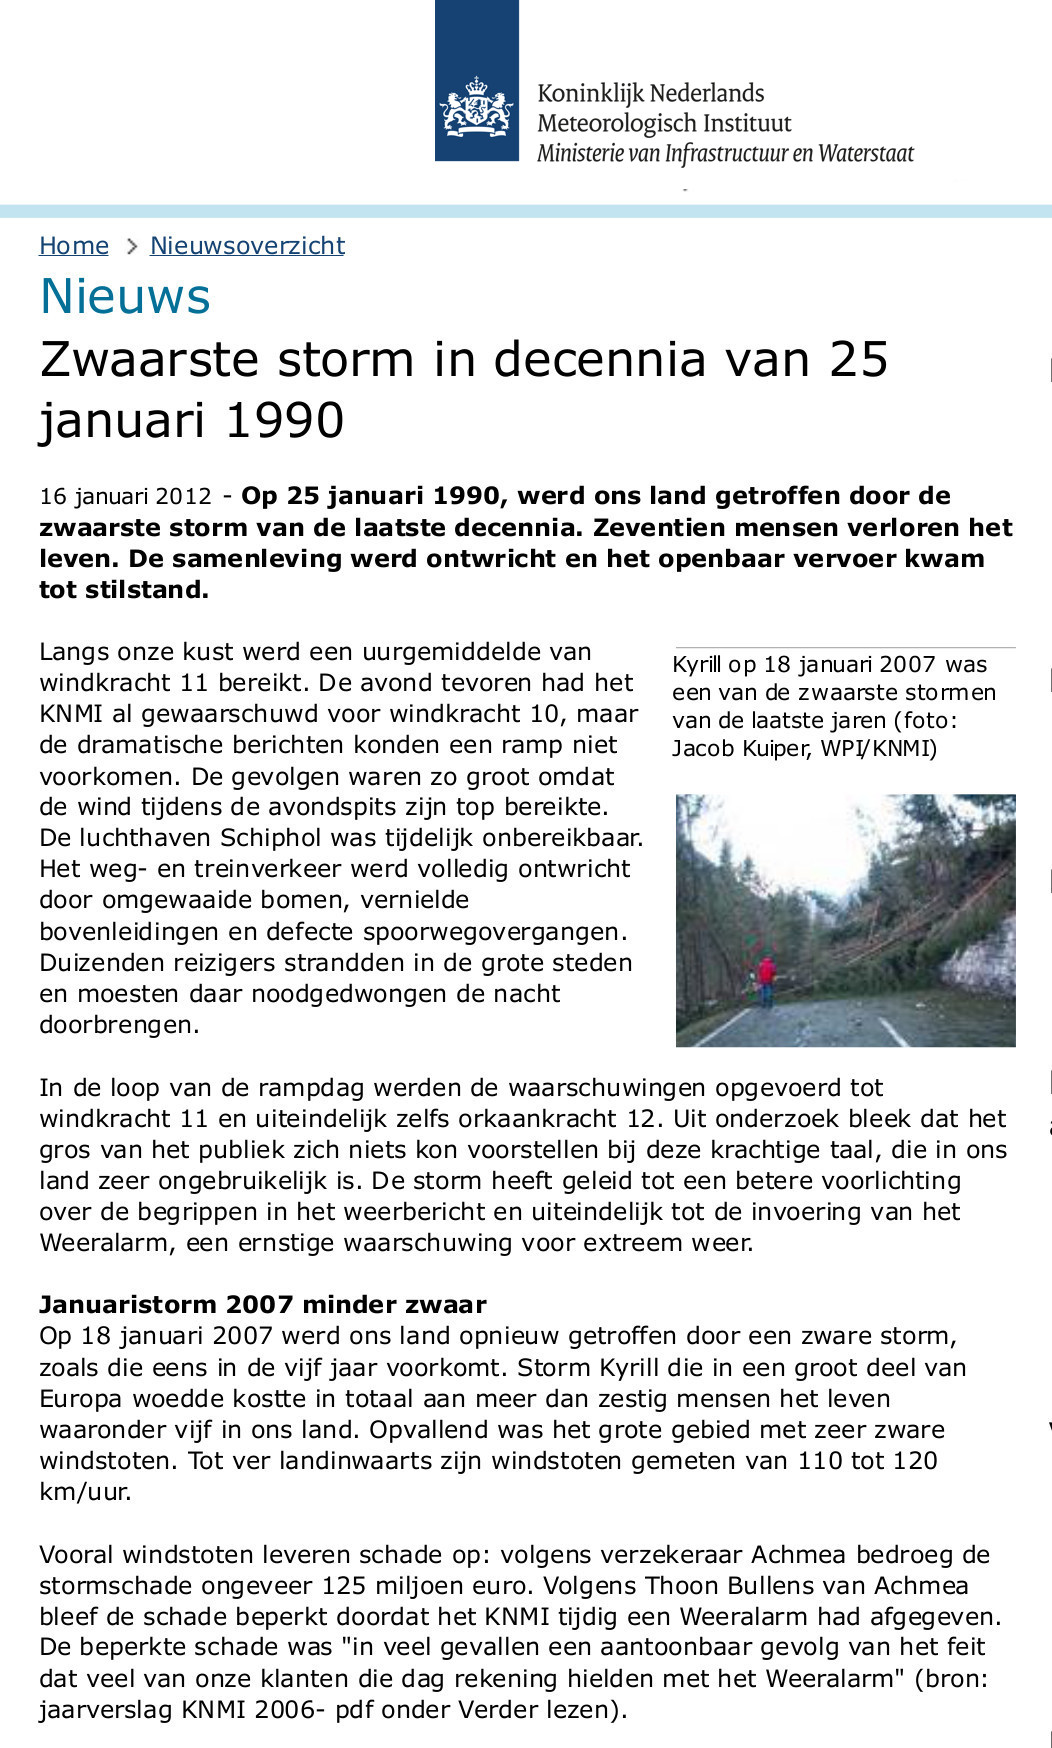 Zwaarste storm in decennia, 26 januari 1990
PHŒBUS•Rotterdam